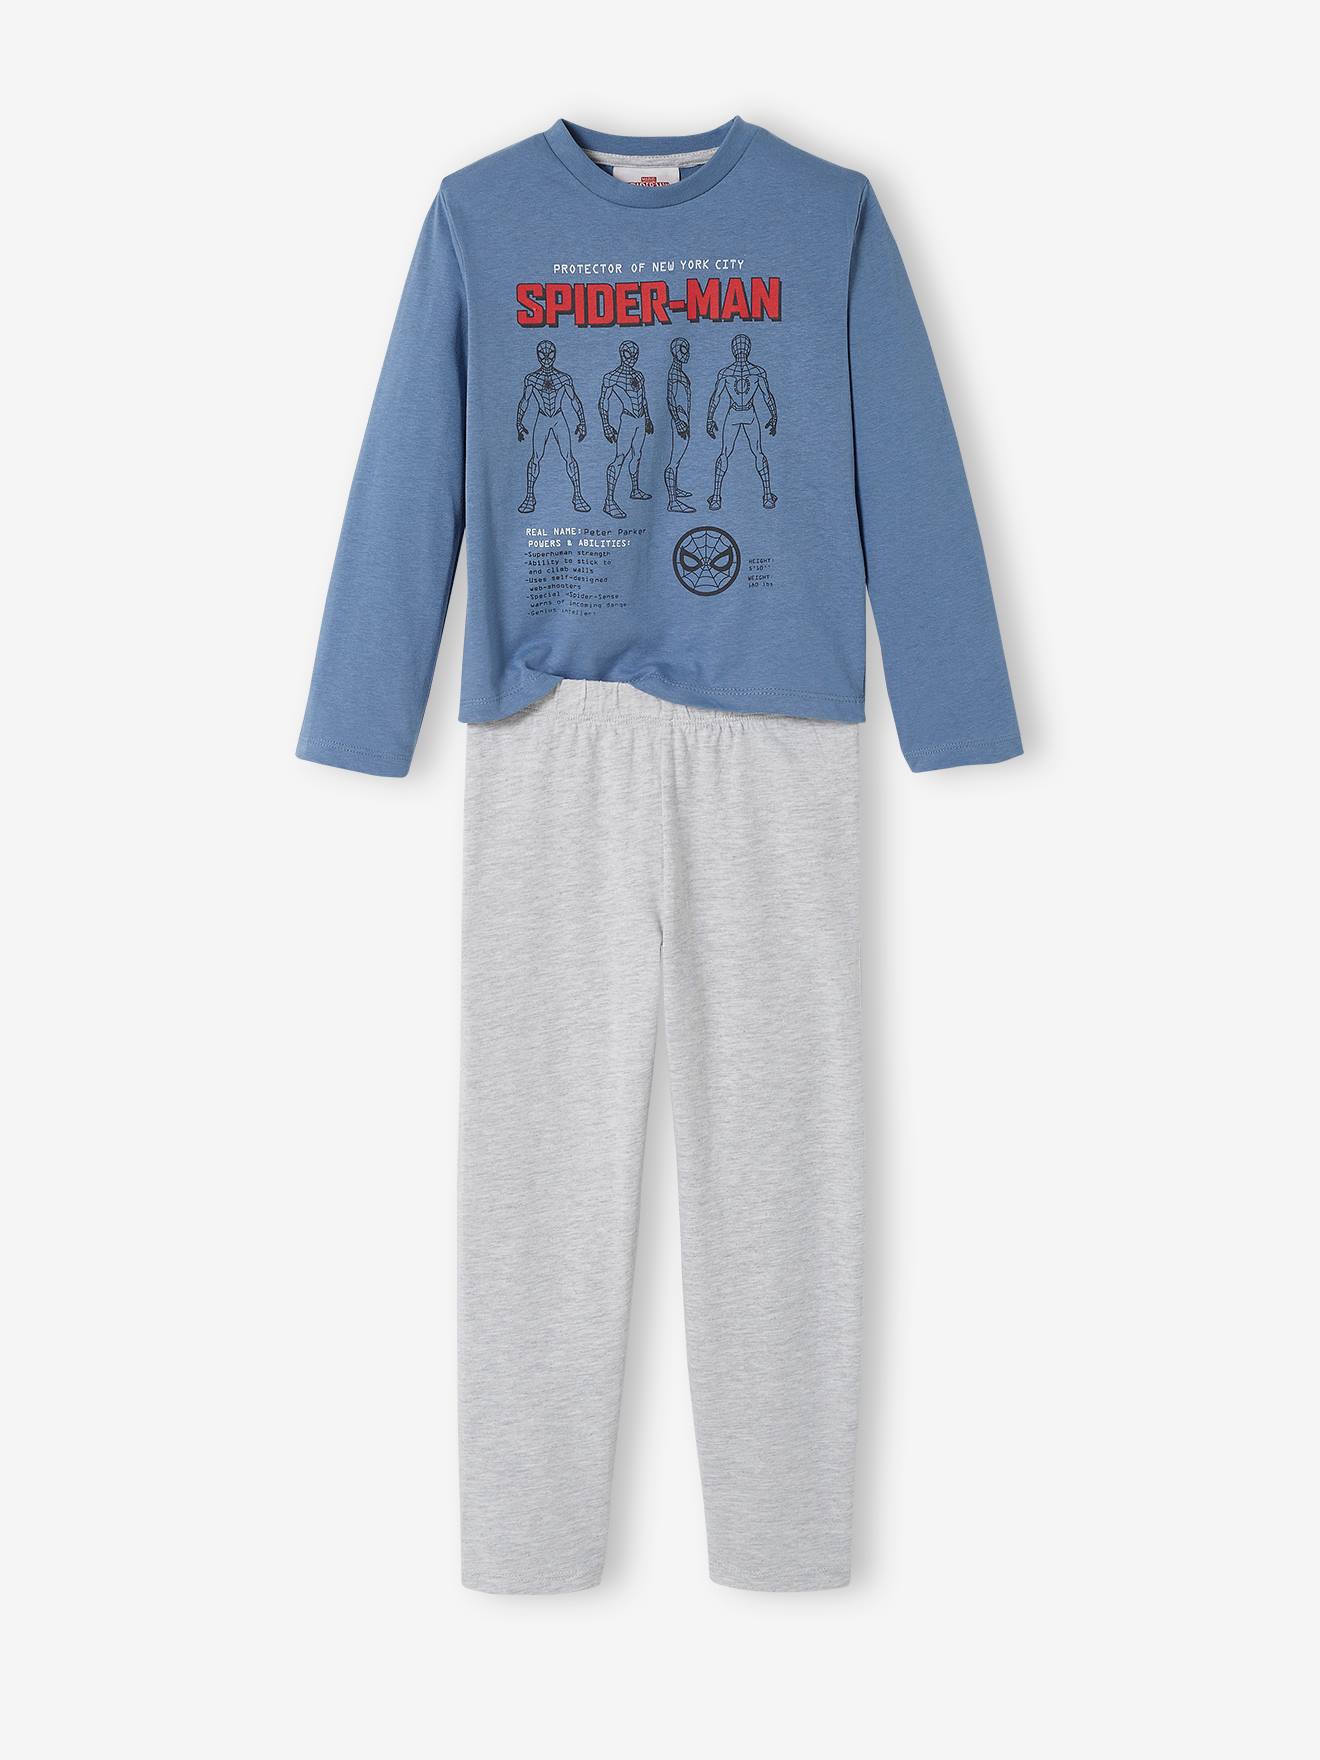 Ligatie zondaar gids Pyjamas for Boys, Spiderman by Marvel® - blue dark solid with design, Boys